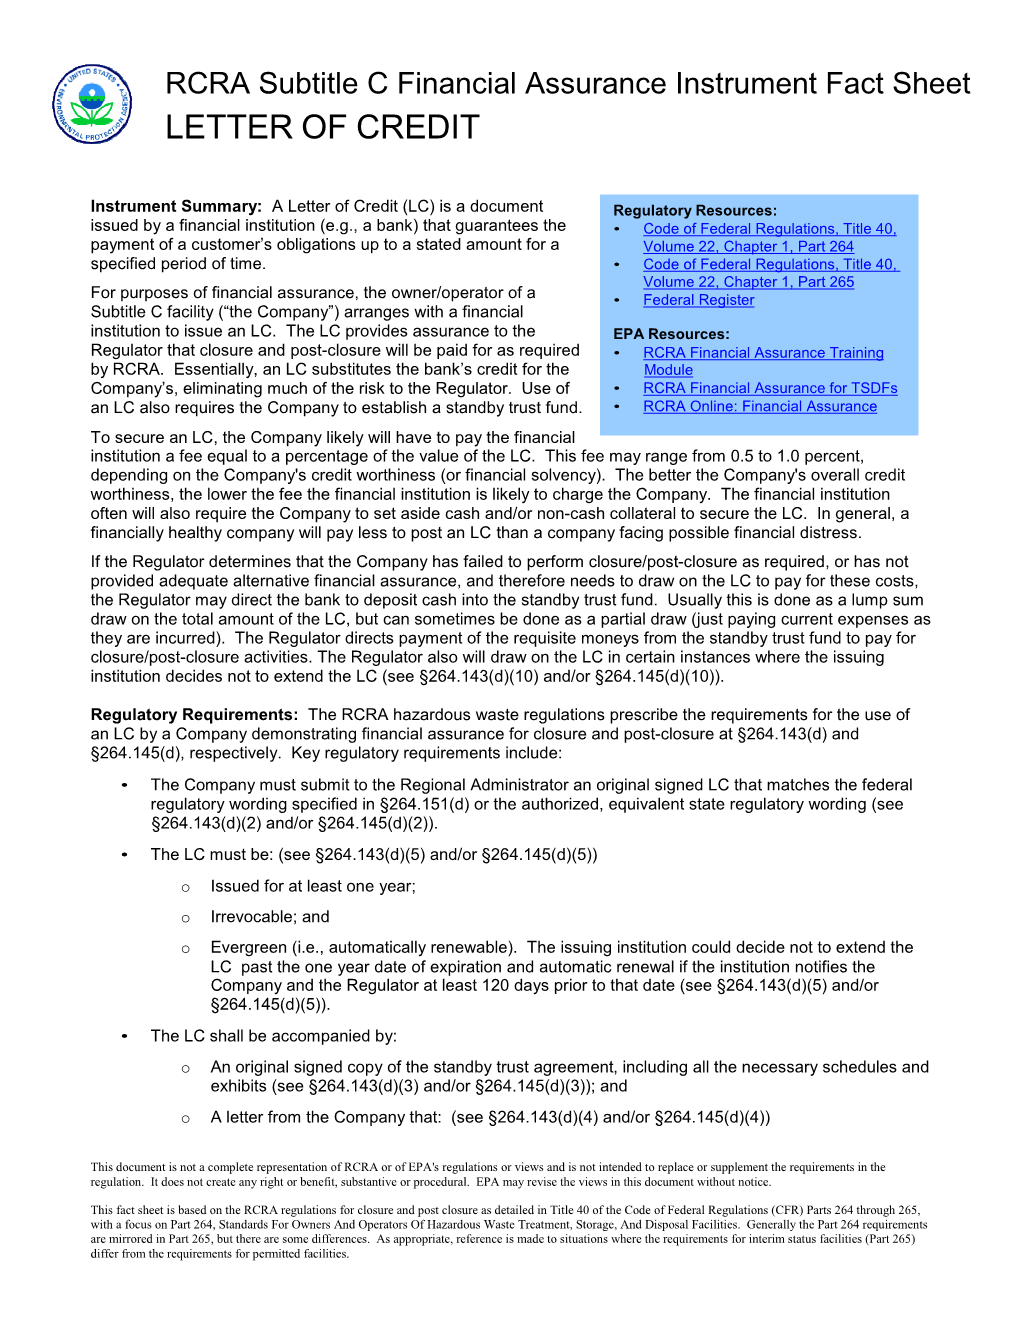 RCRA Subtitle C Financial Assurance Instrument Fact Sheet LETTER of CREDIT